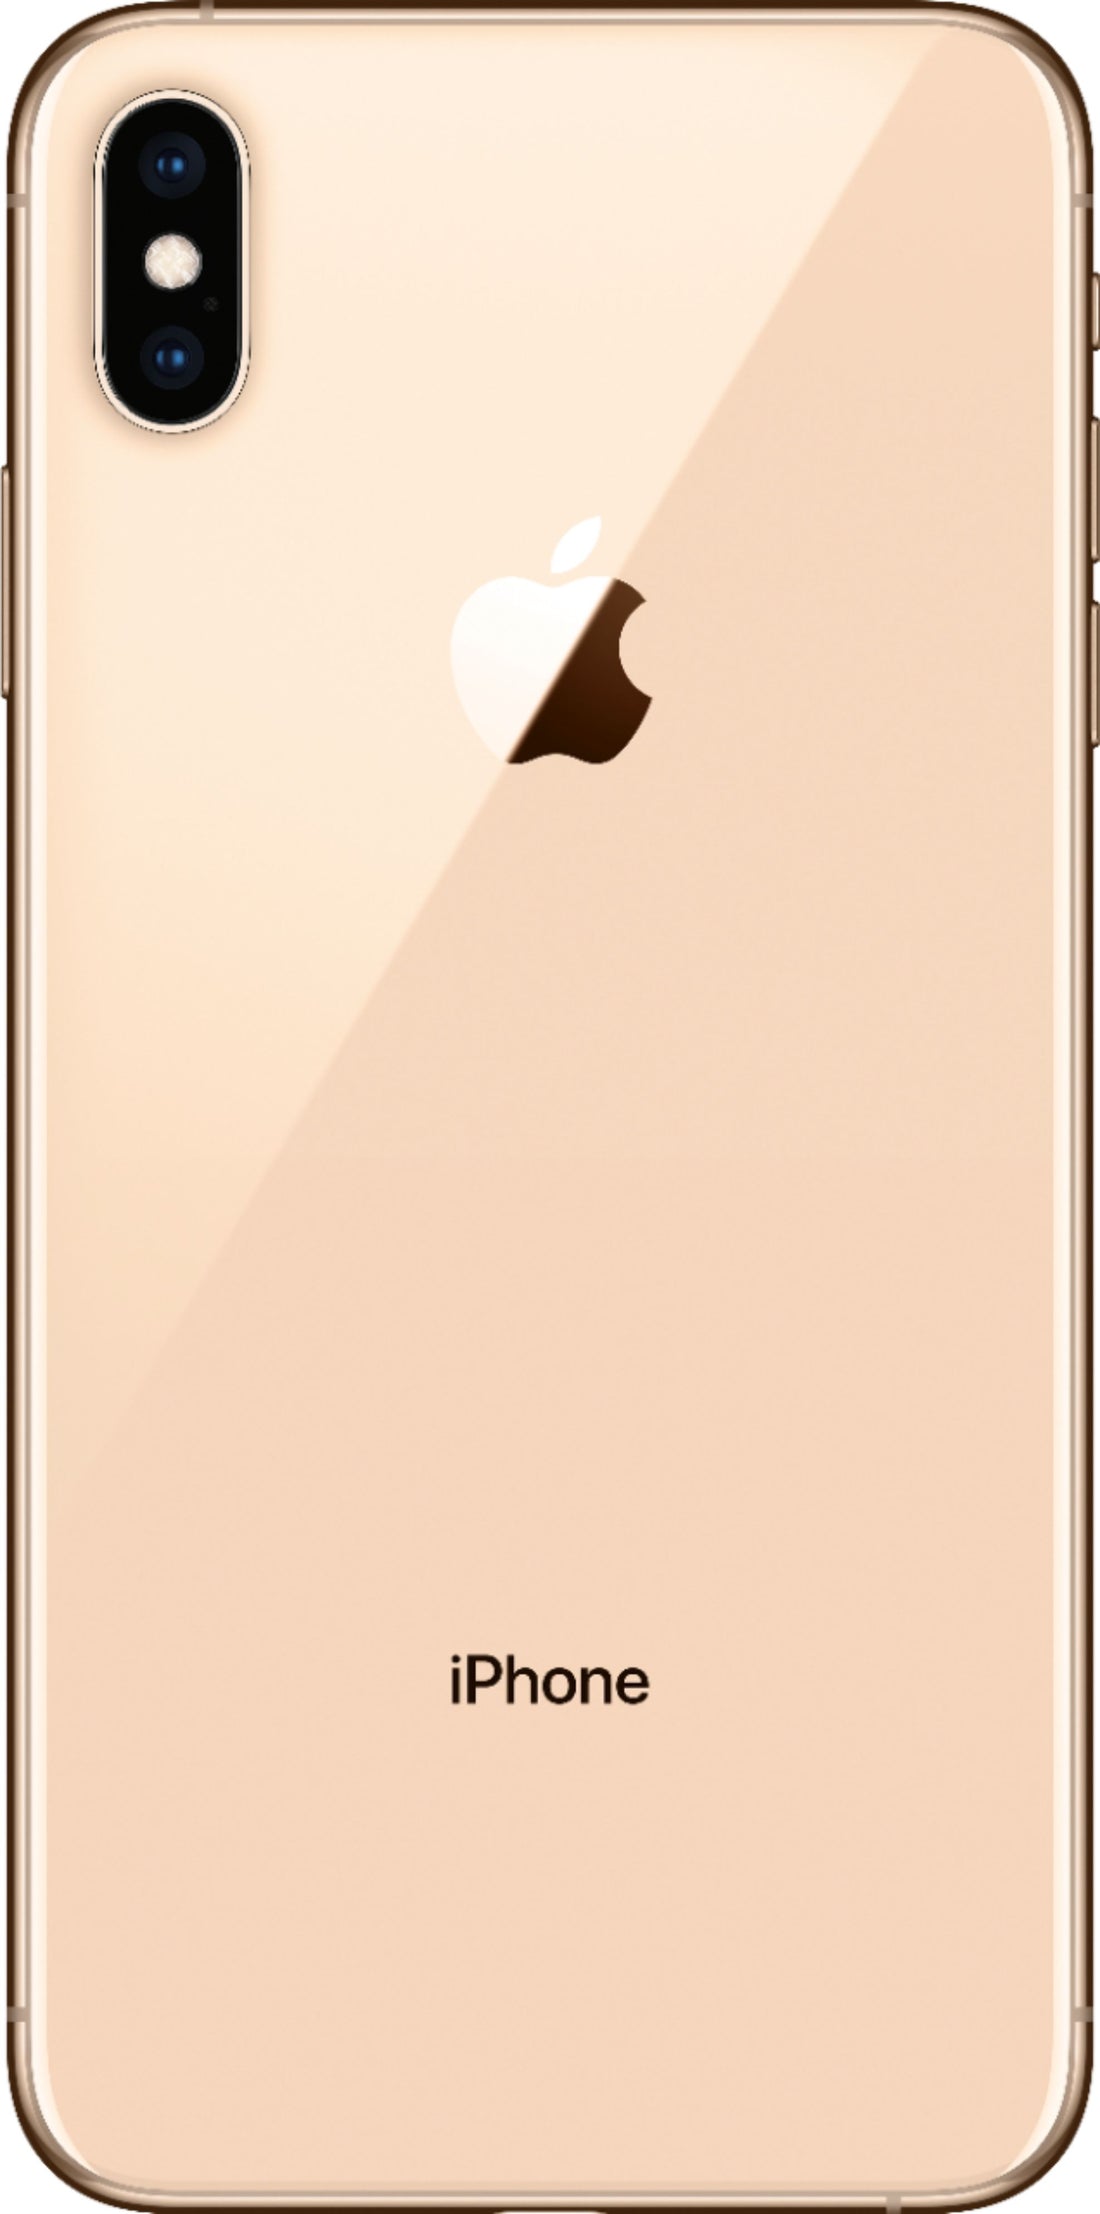 Apple iPhone XS Max 64GB (Unlocked) - Gold (Used)